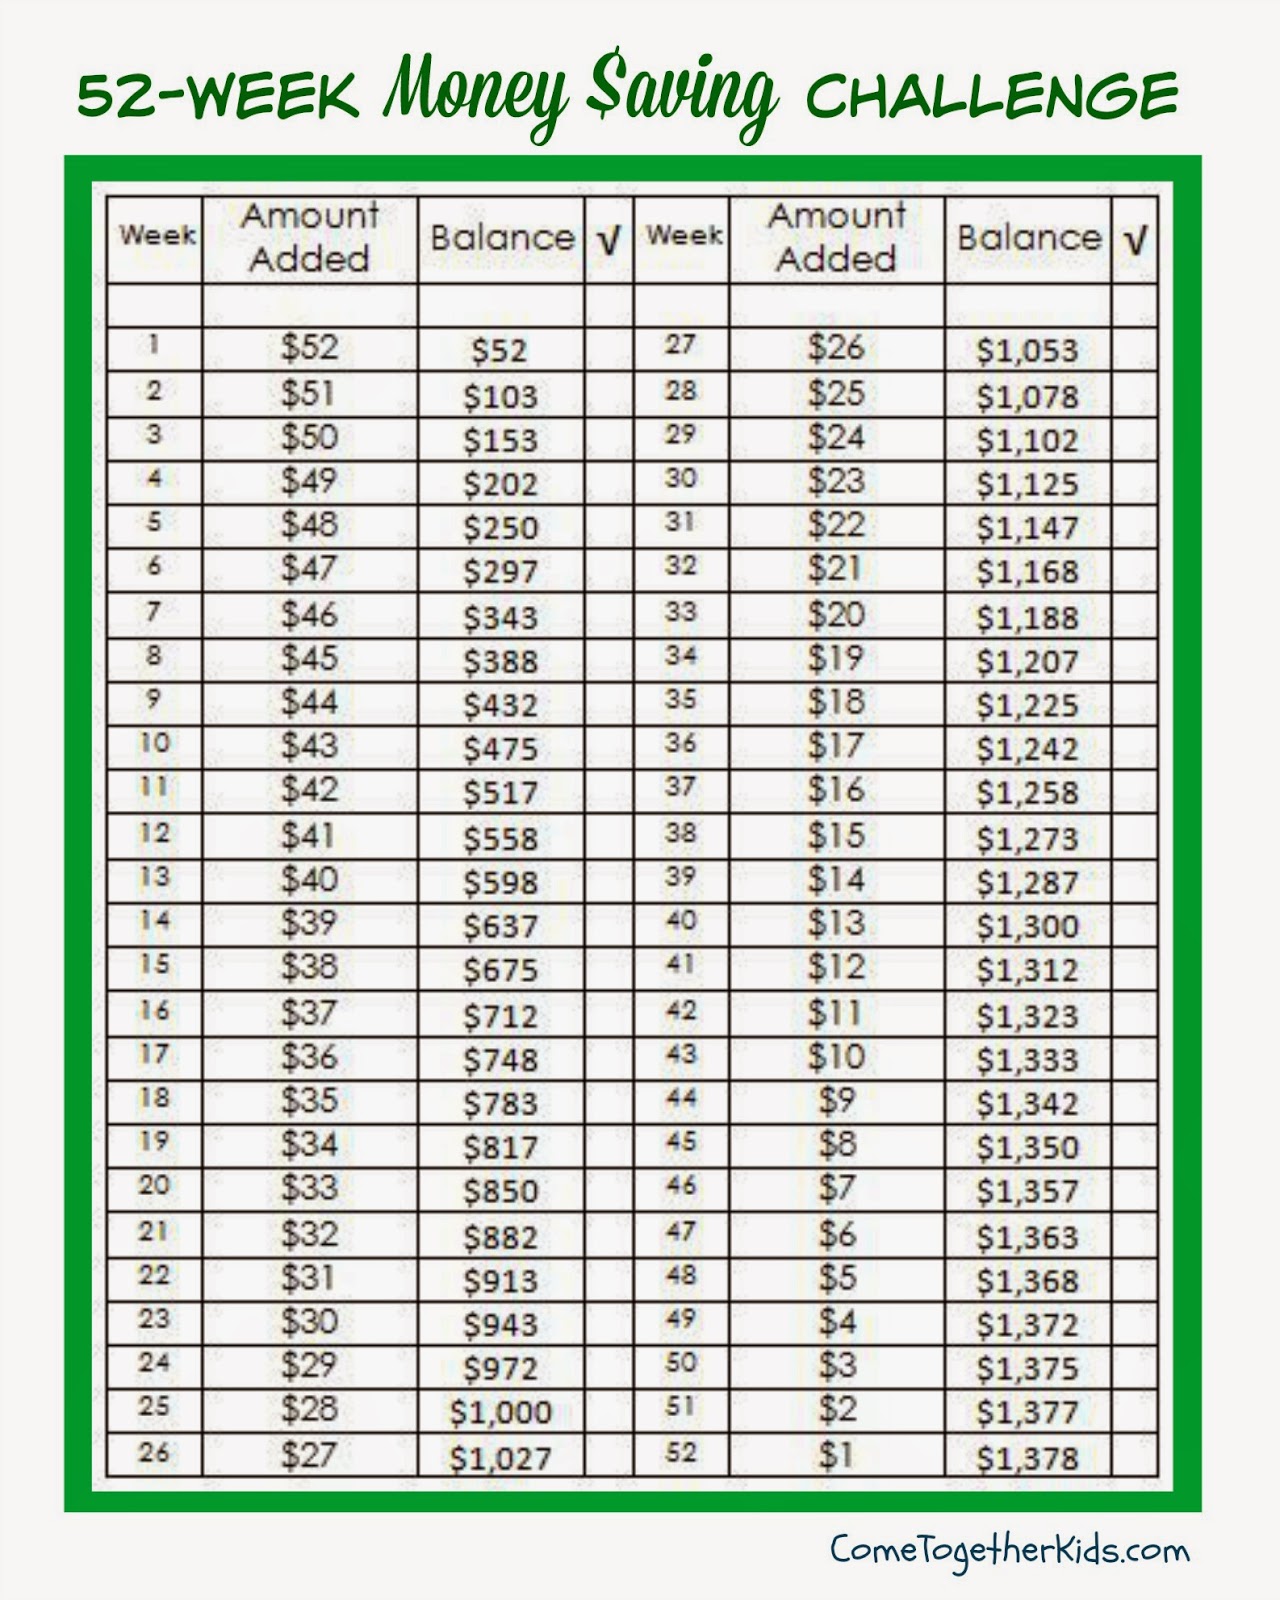 10-best-images-of-52-week-money-challenge-backwards-printable-chart-2015-52-week-money